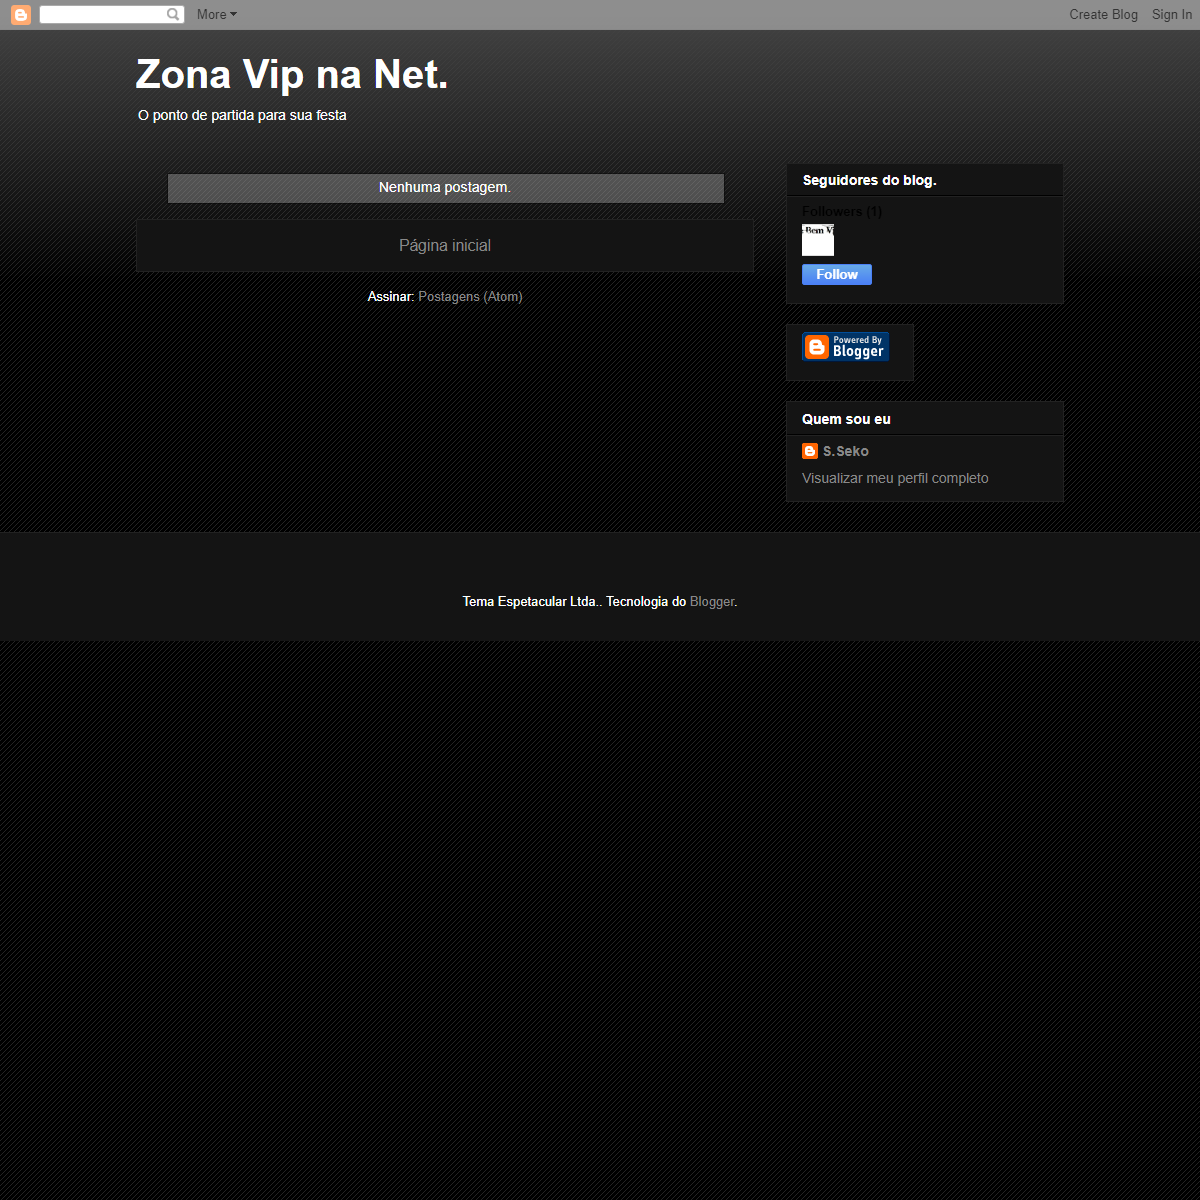 Zona Vip na Net.